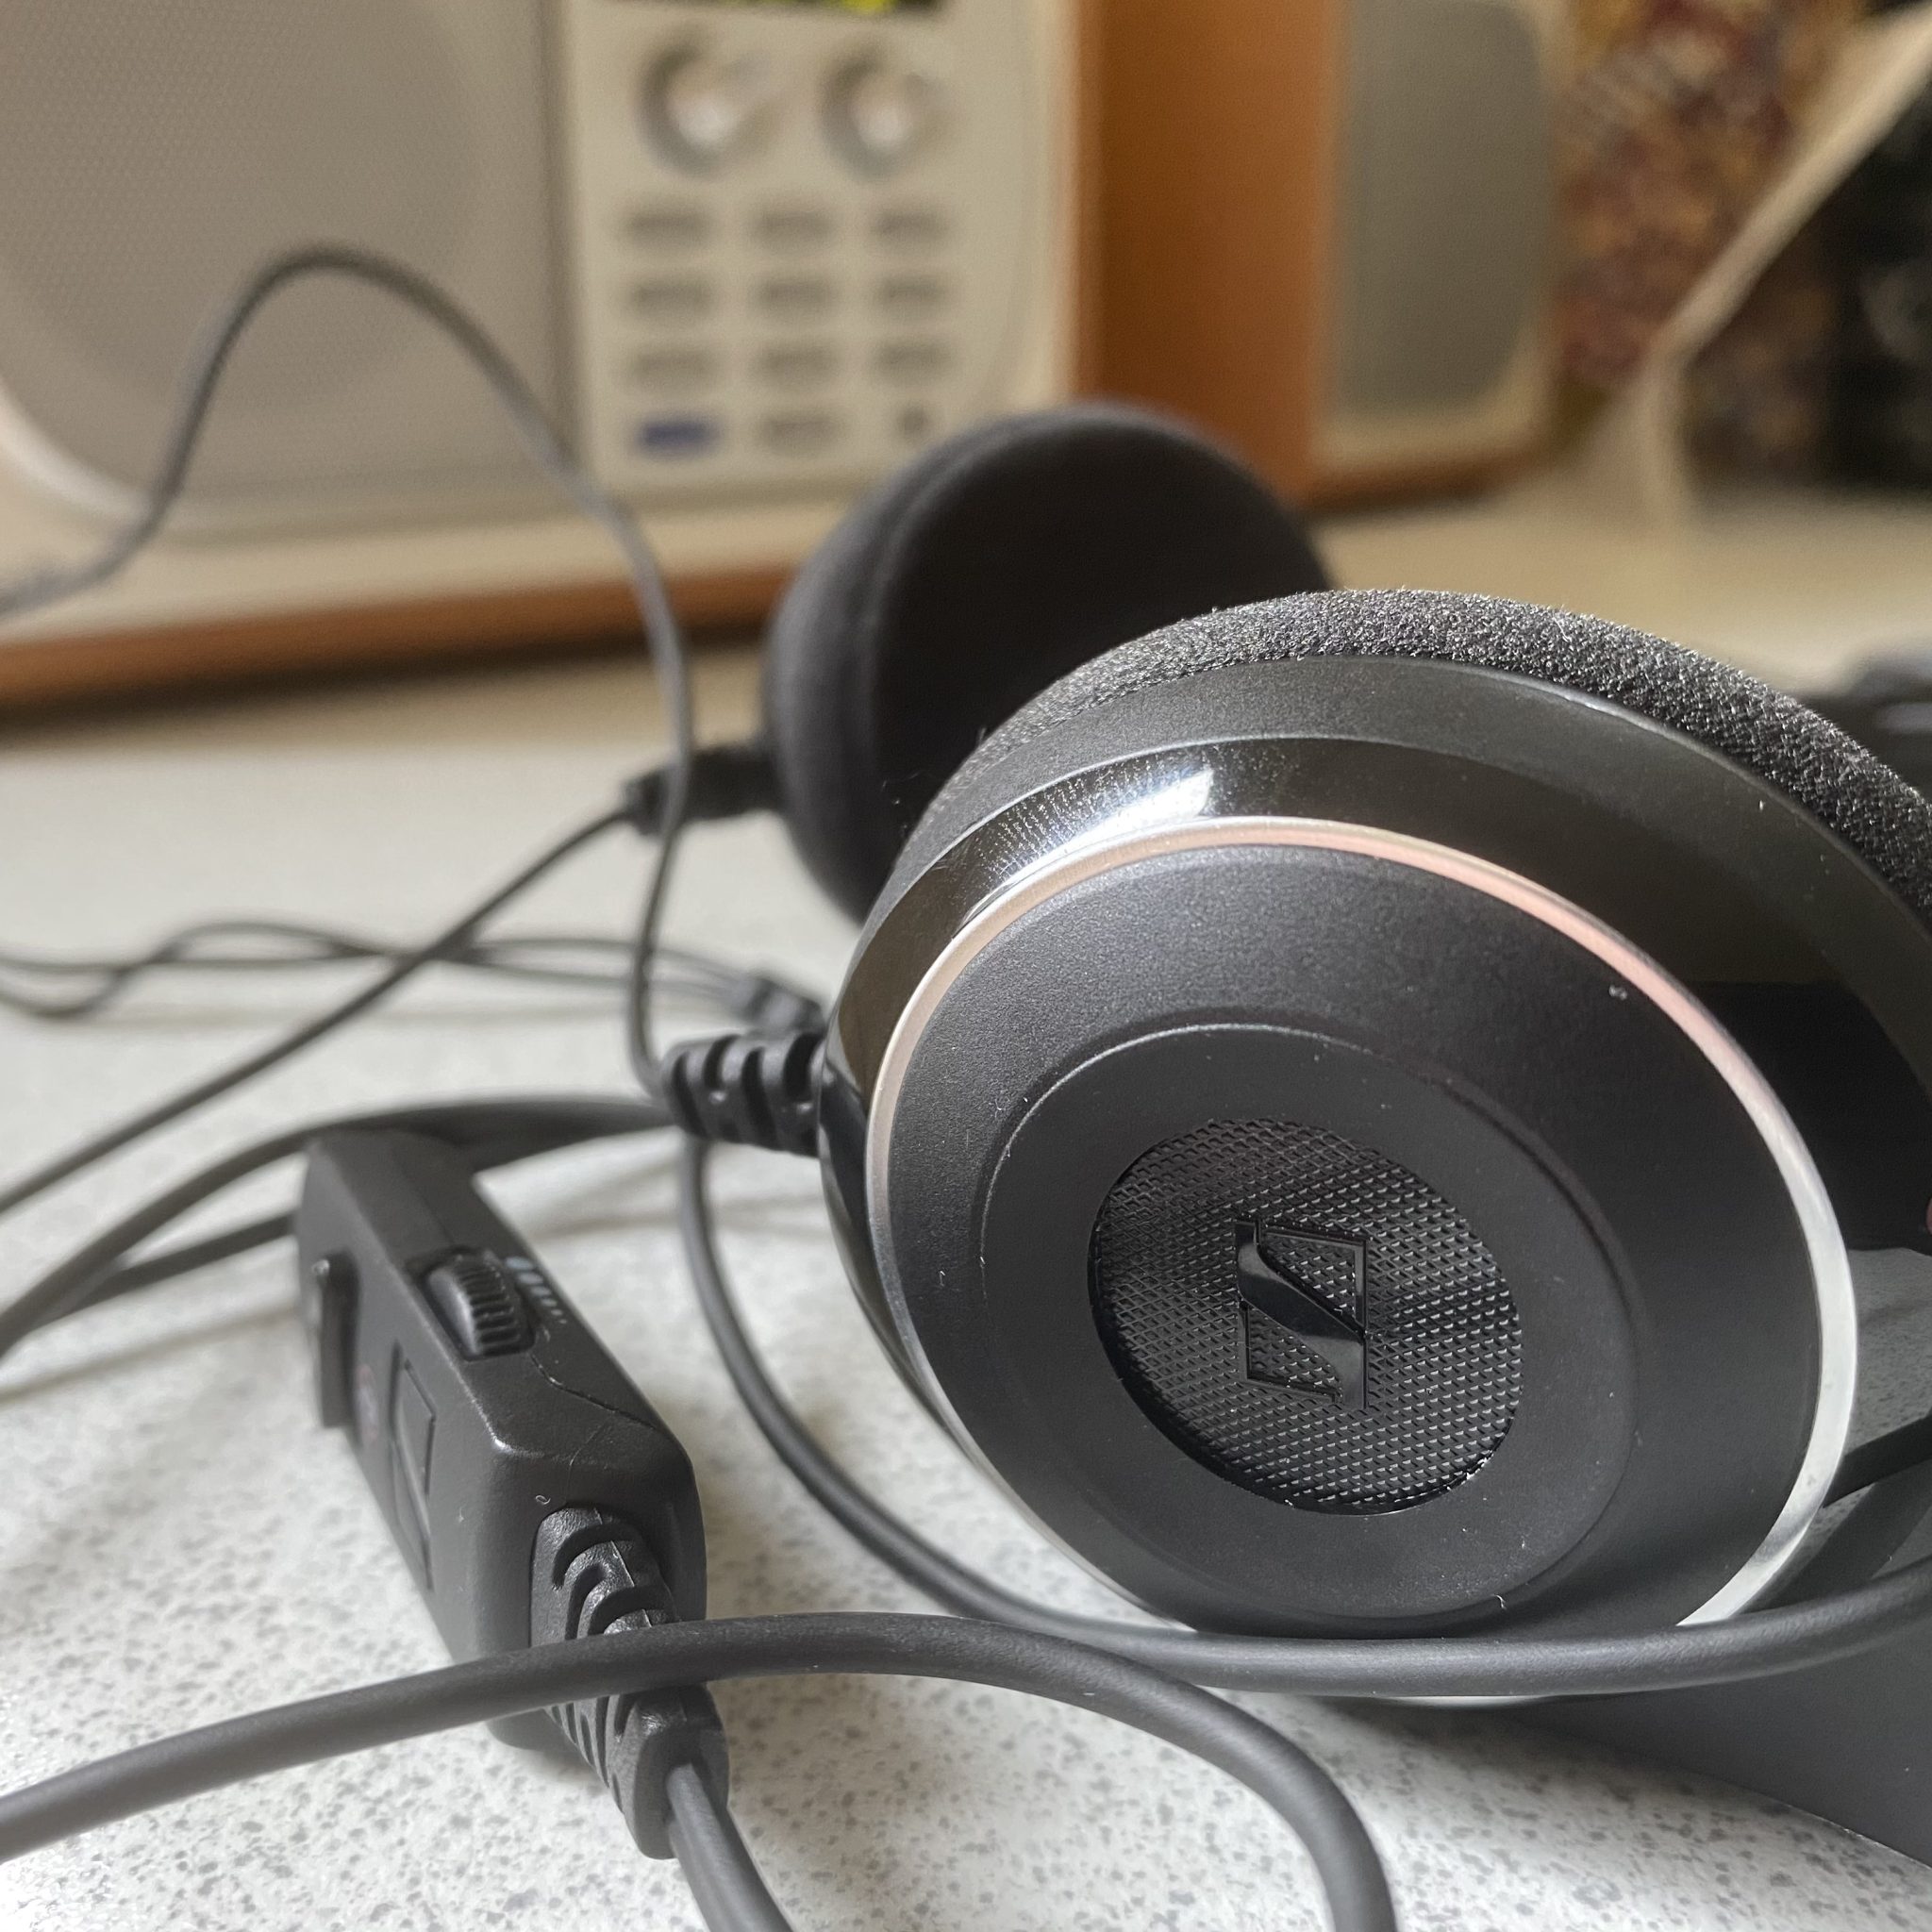 Headphones (with bokeh background)